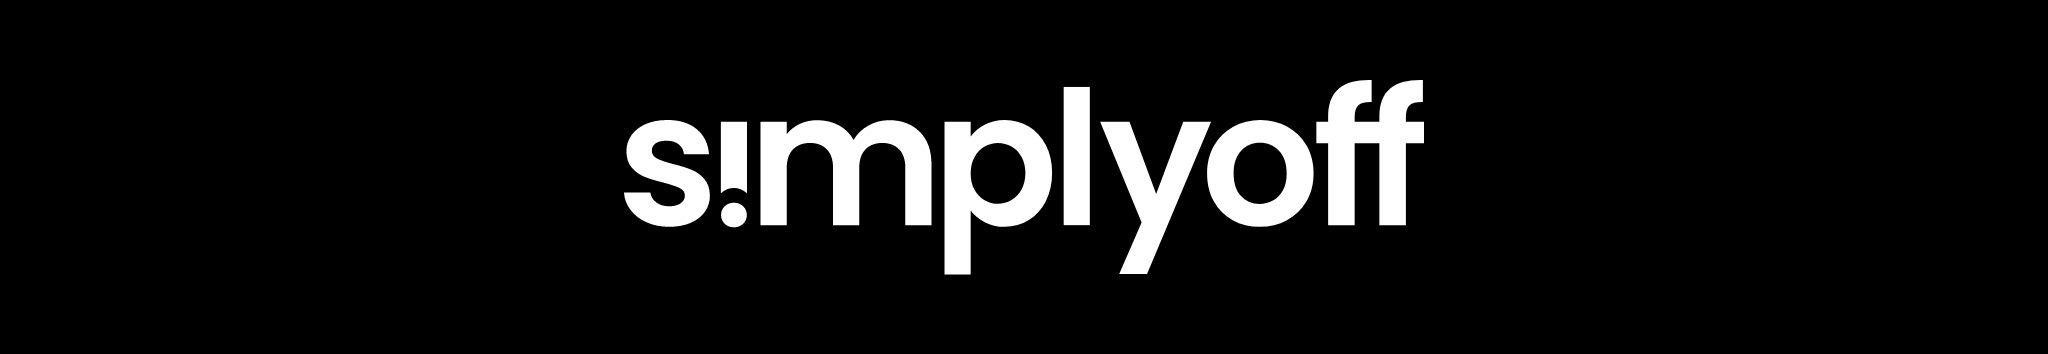 simplyoff studio's profile banner